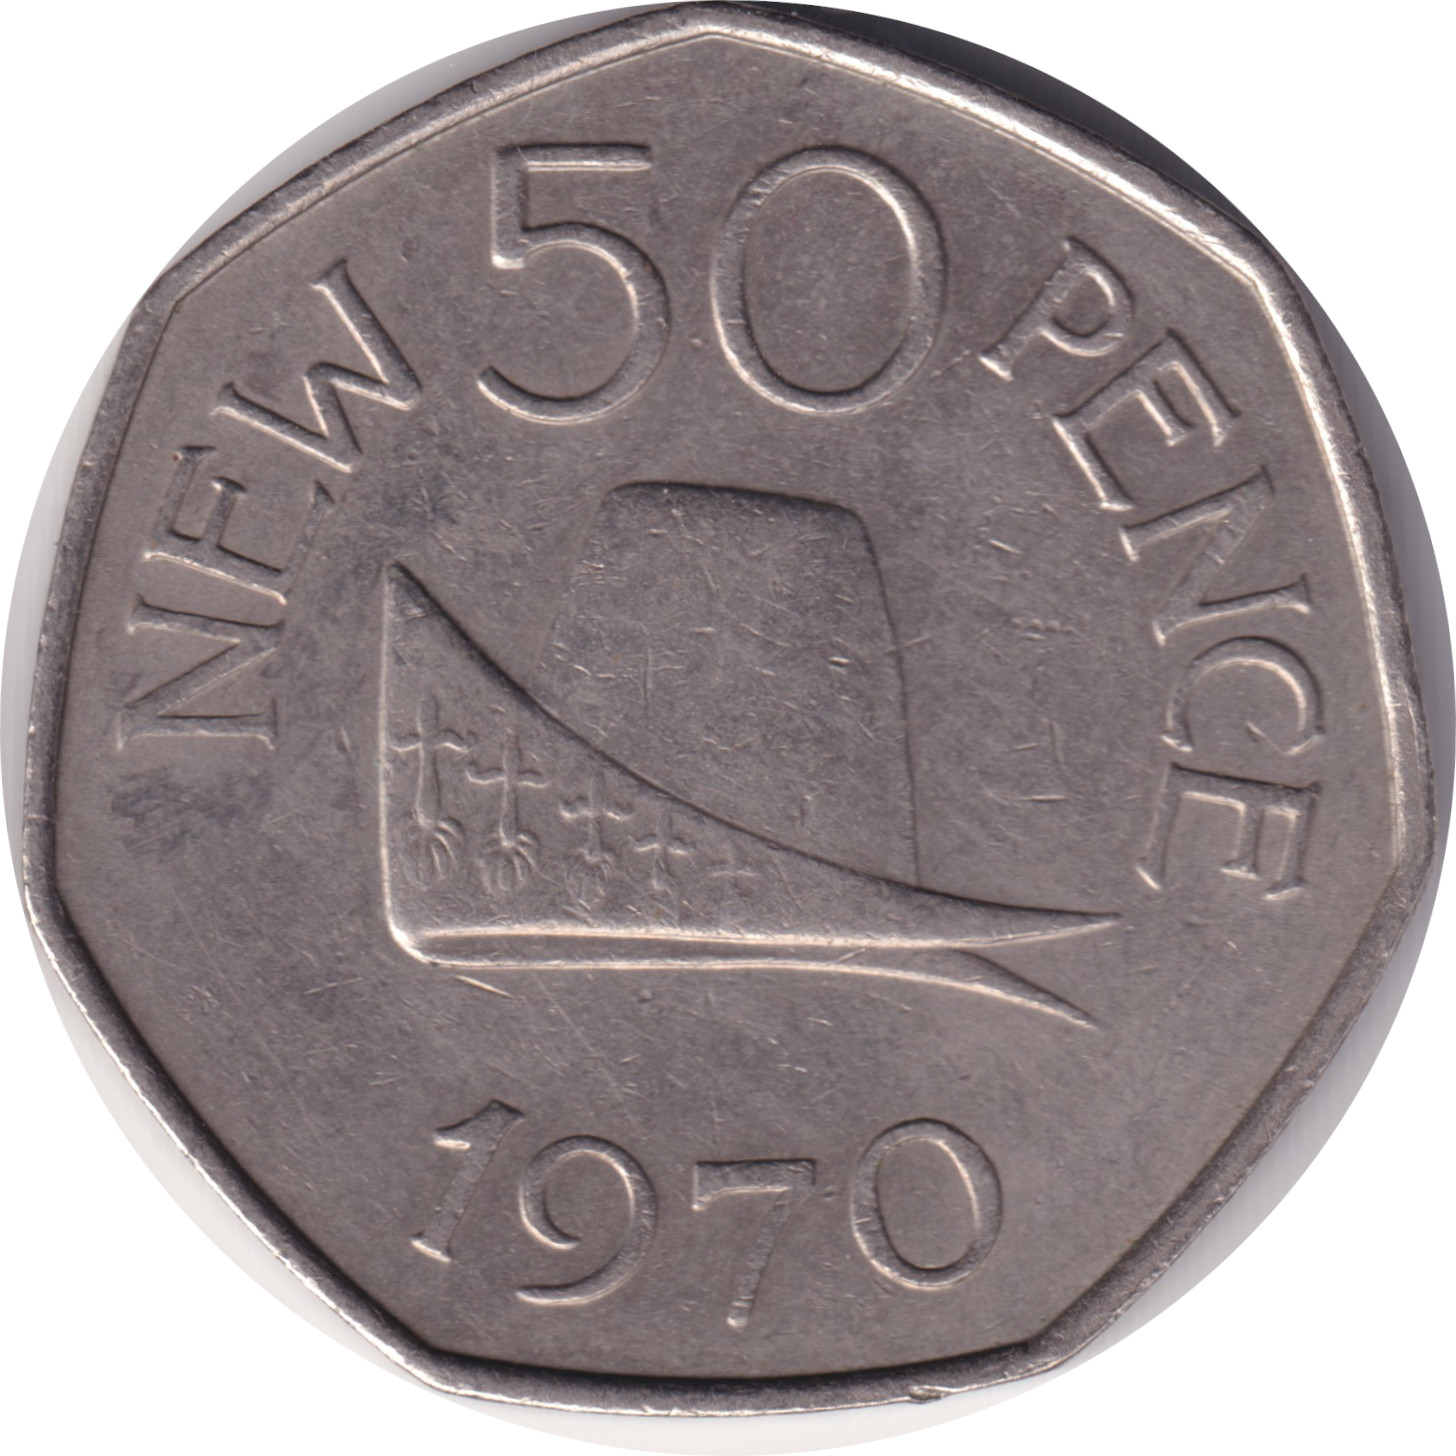 50 pence - Blason - New pence